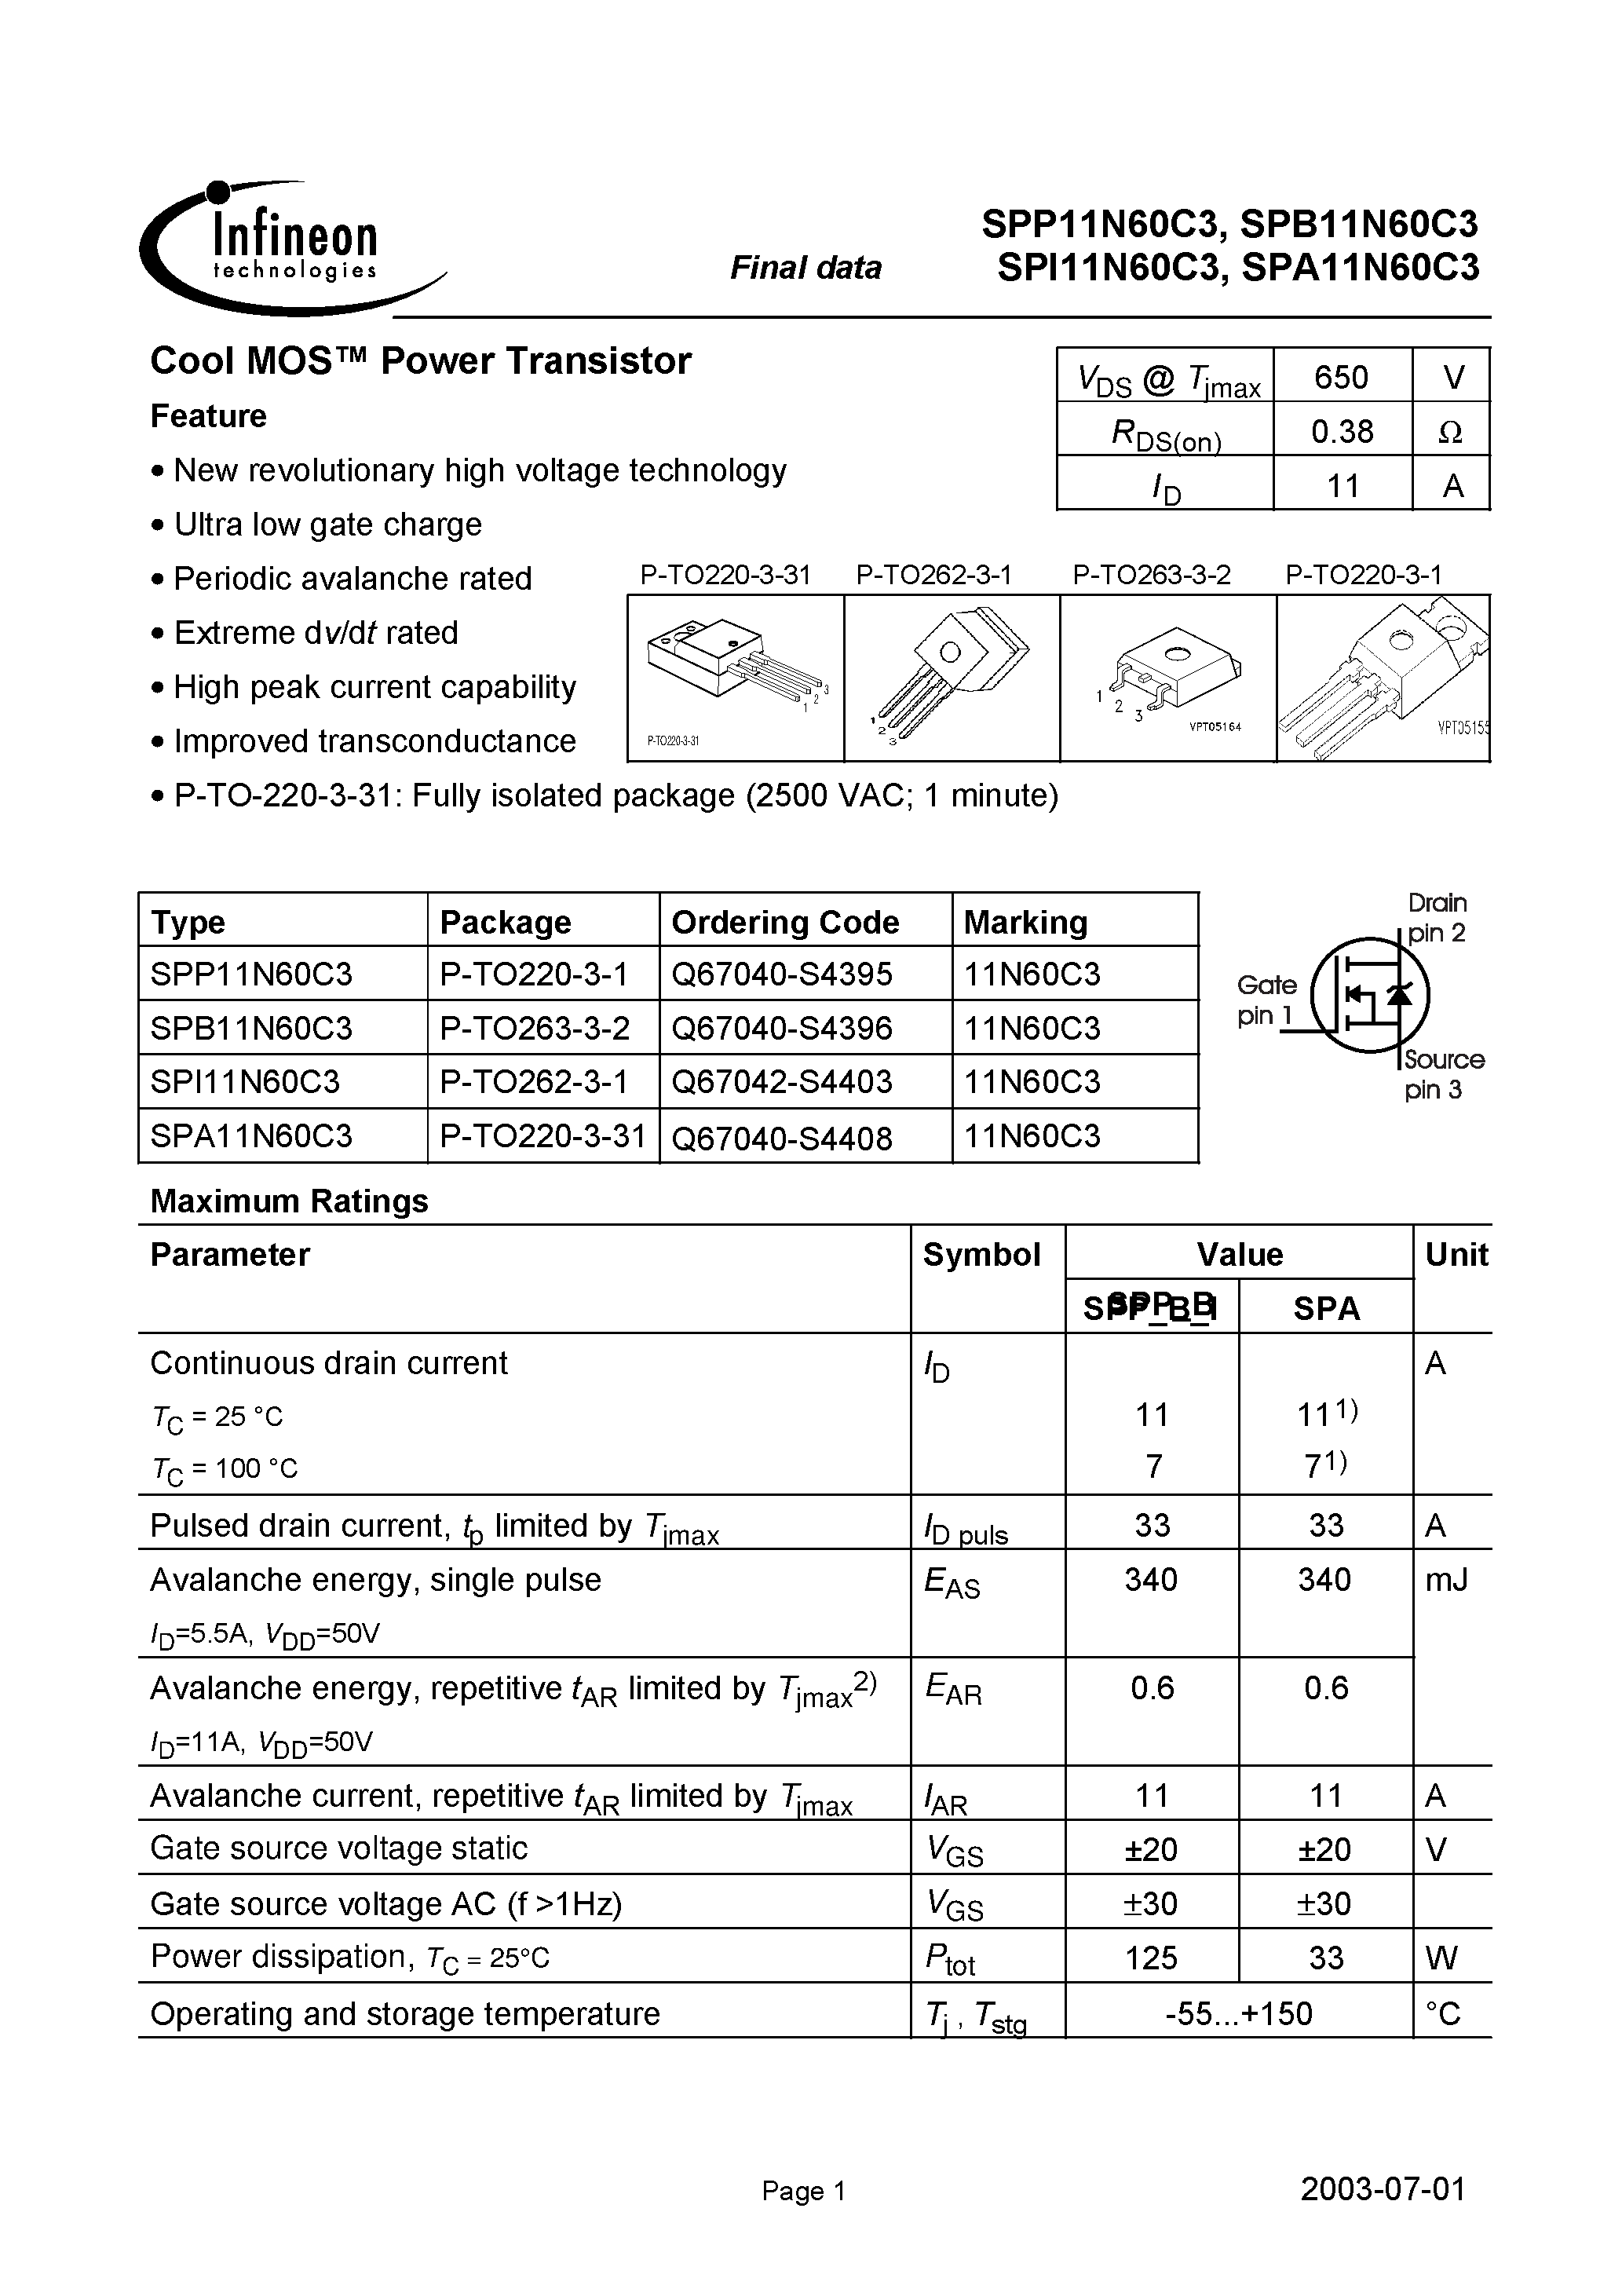 Даташит SPI11N60C3 - Cool MOS Power Transistor страница 1